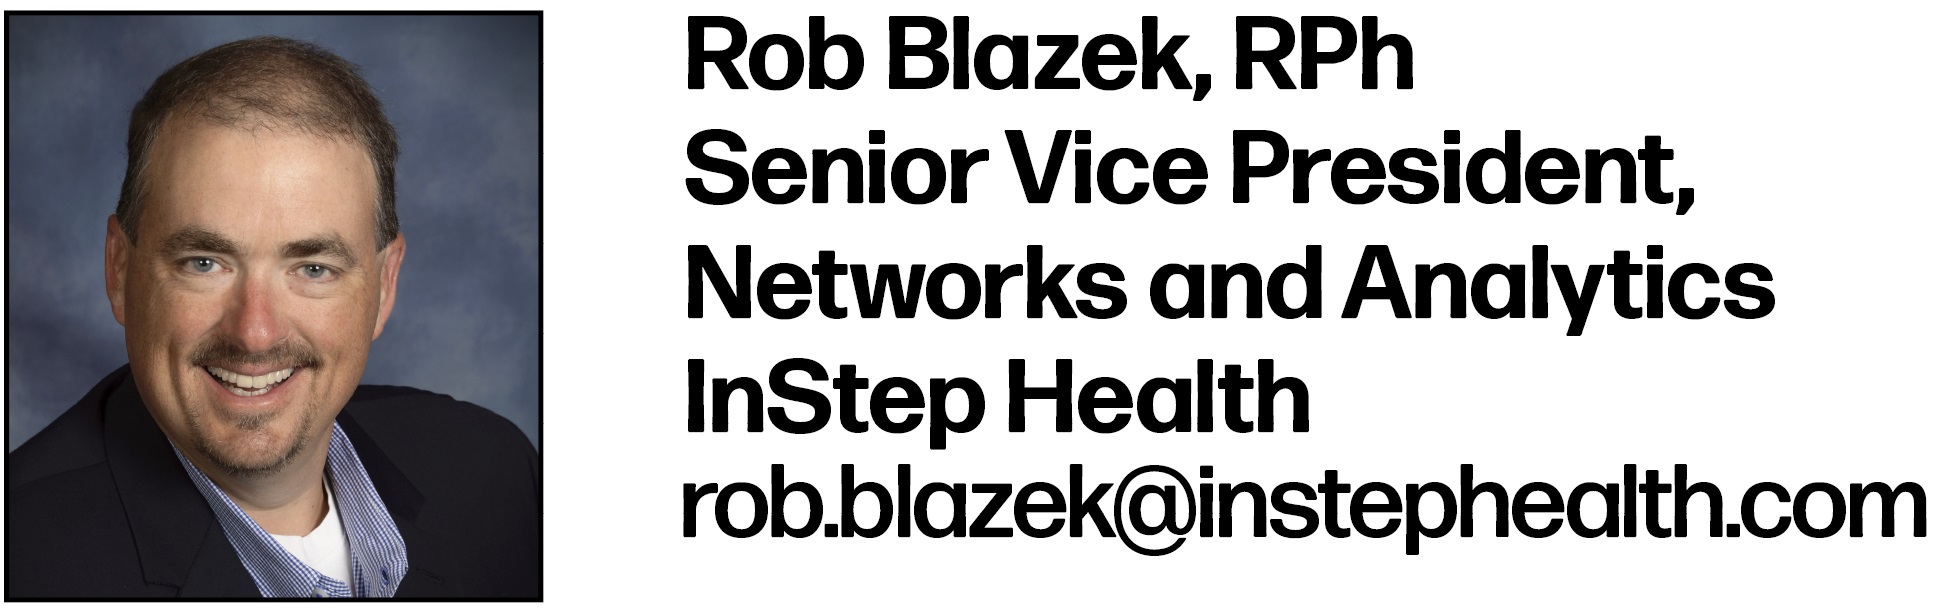 Rob Blazek, RPh Senior Vice President, Networks and Analytics InStep Health rob.blazek@instephealth.com